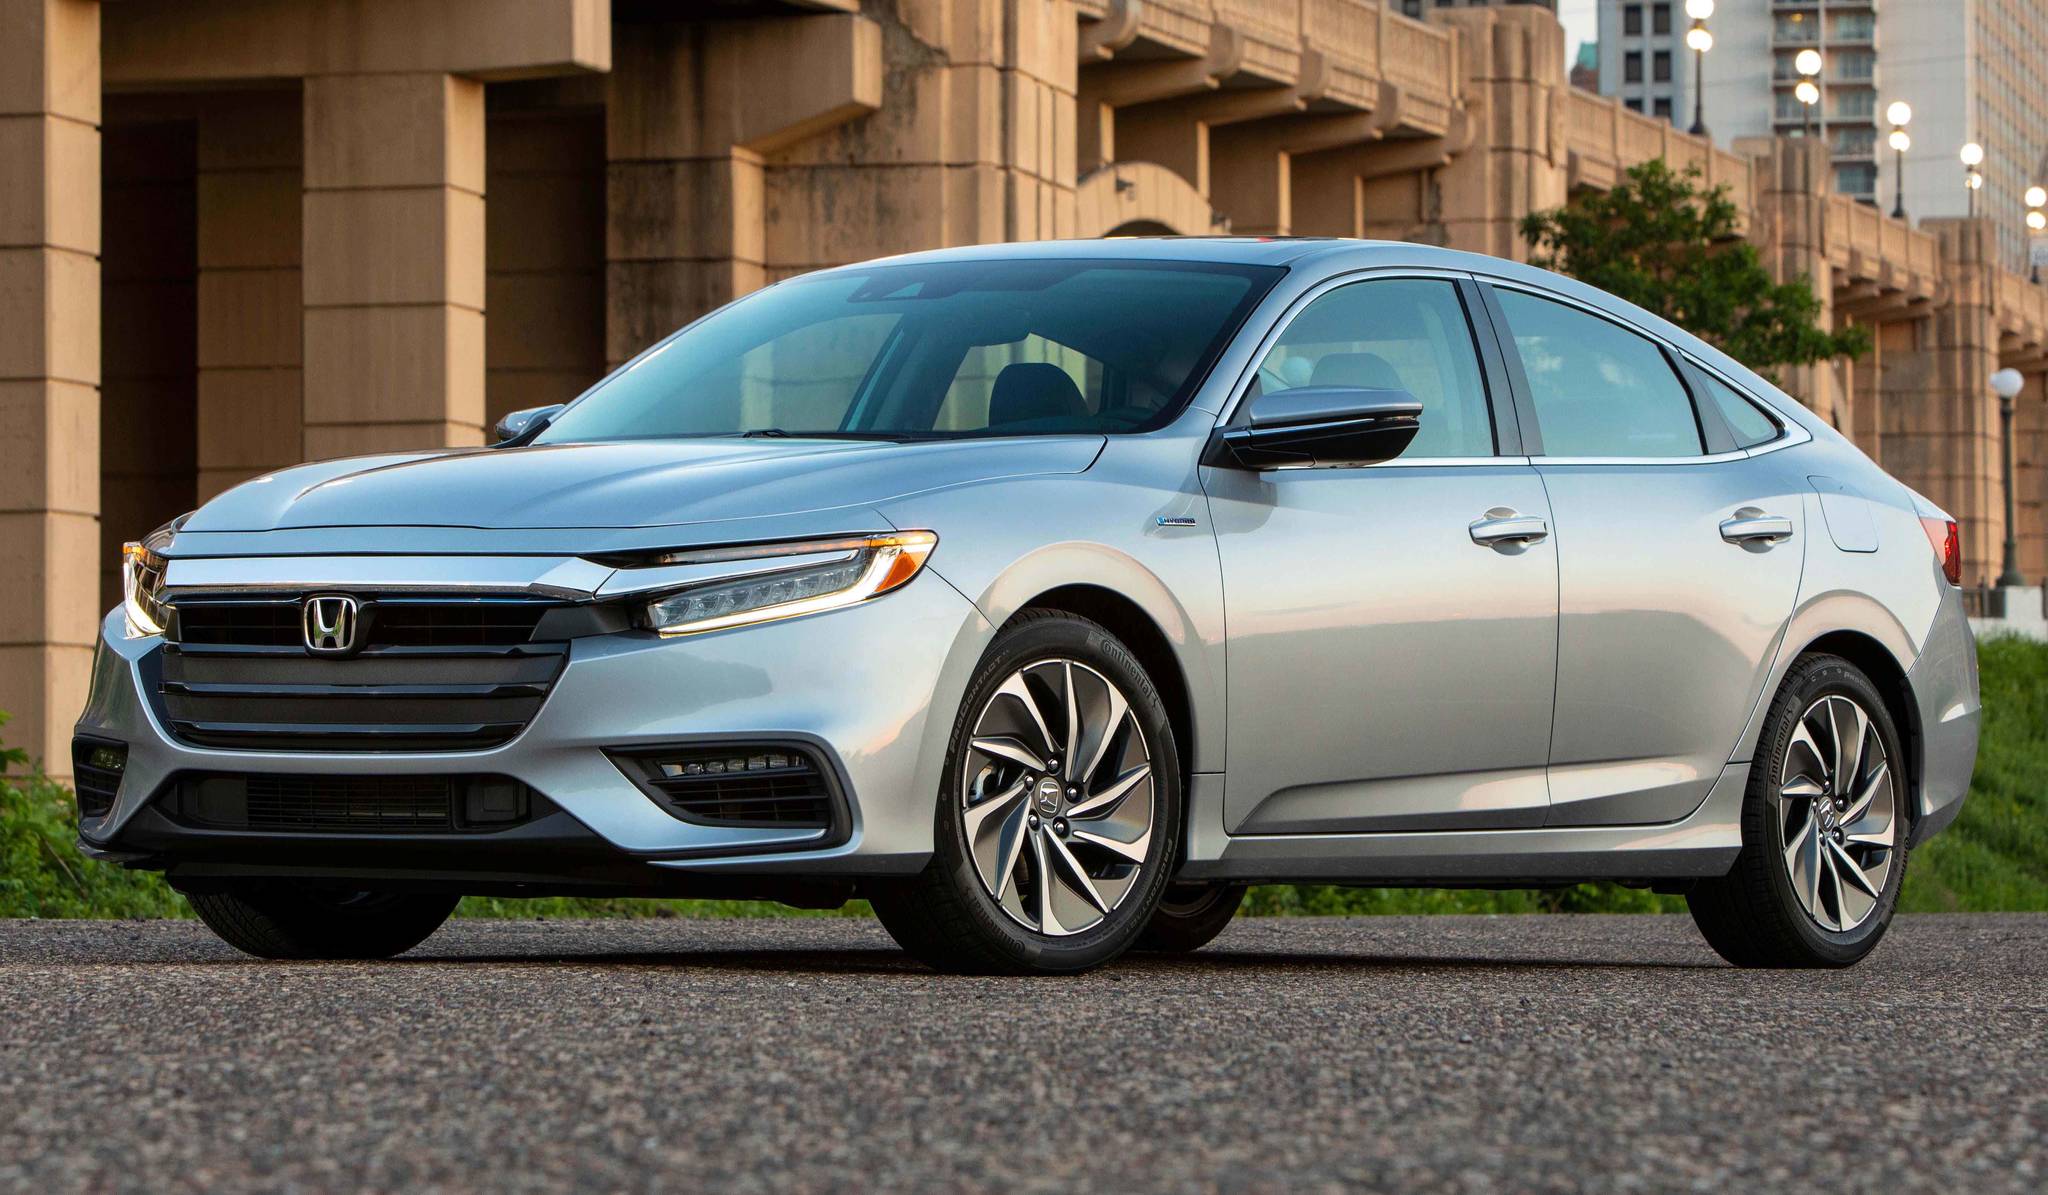 Car review: 2020 Honda Insight | Federal Way Mirror